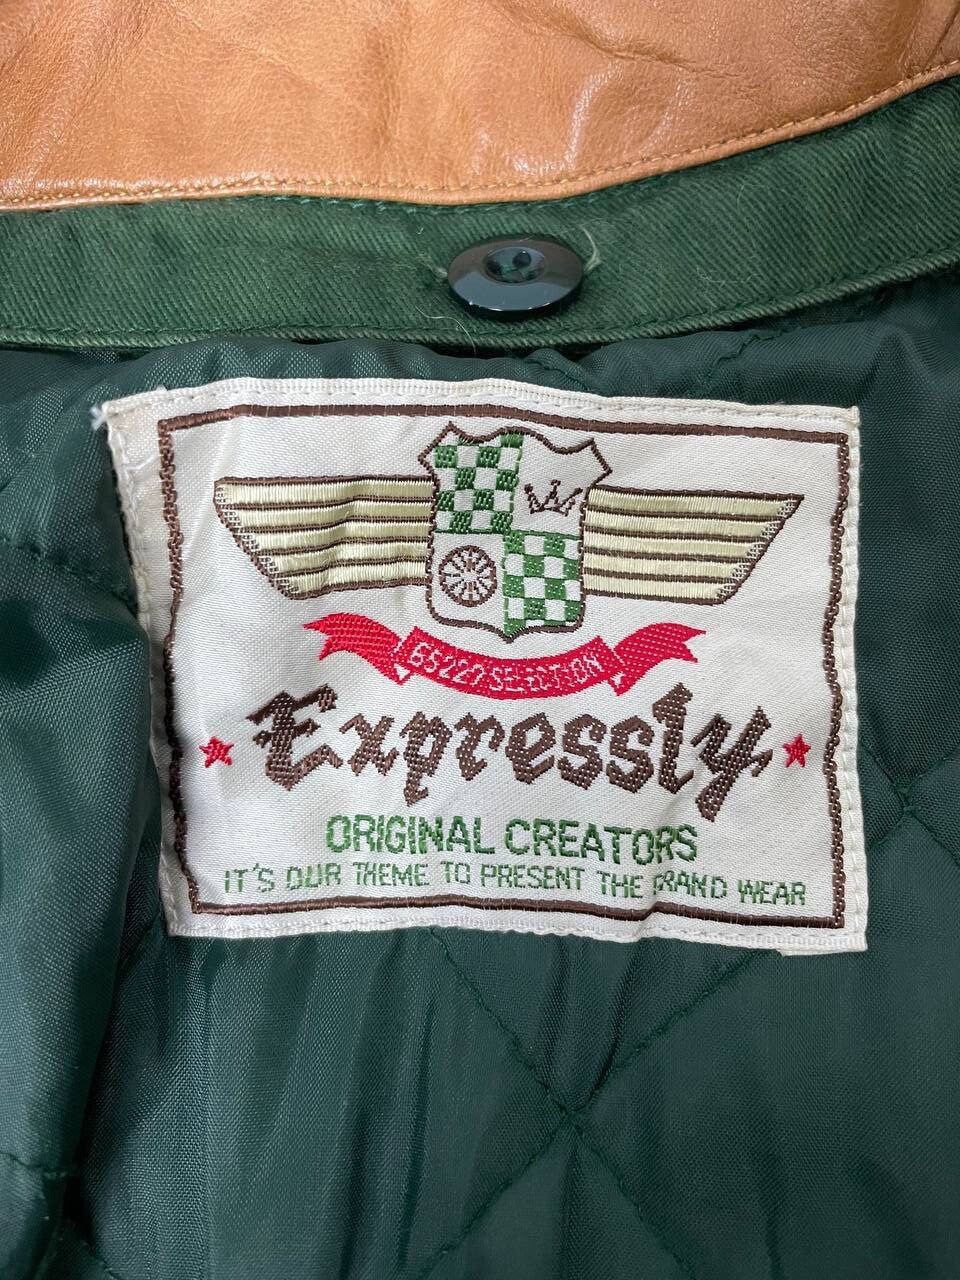 Japanese Brand Expressly Bomber Jacket Vintage 1990s Expressly - Etsy